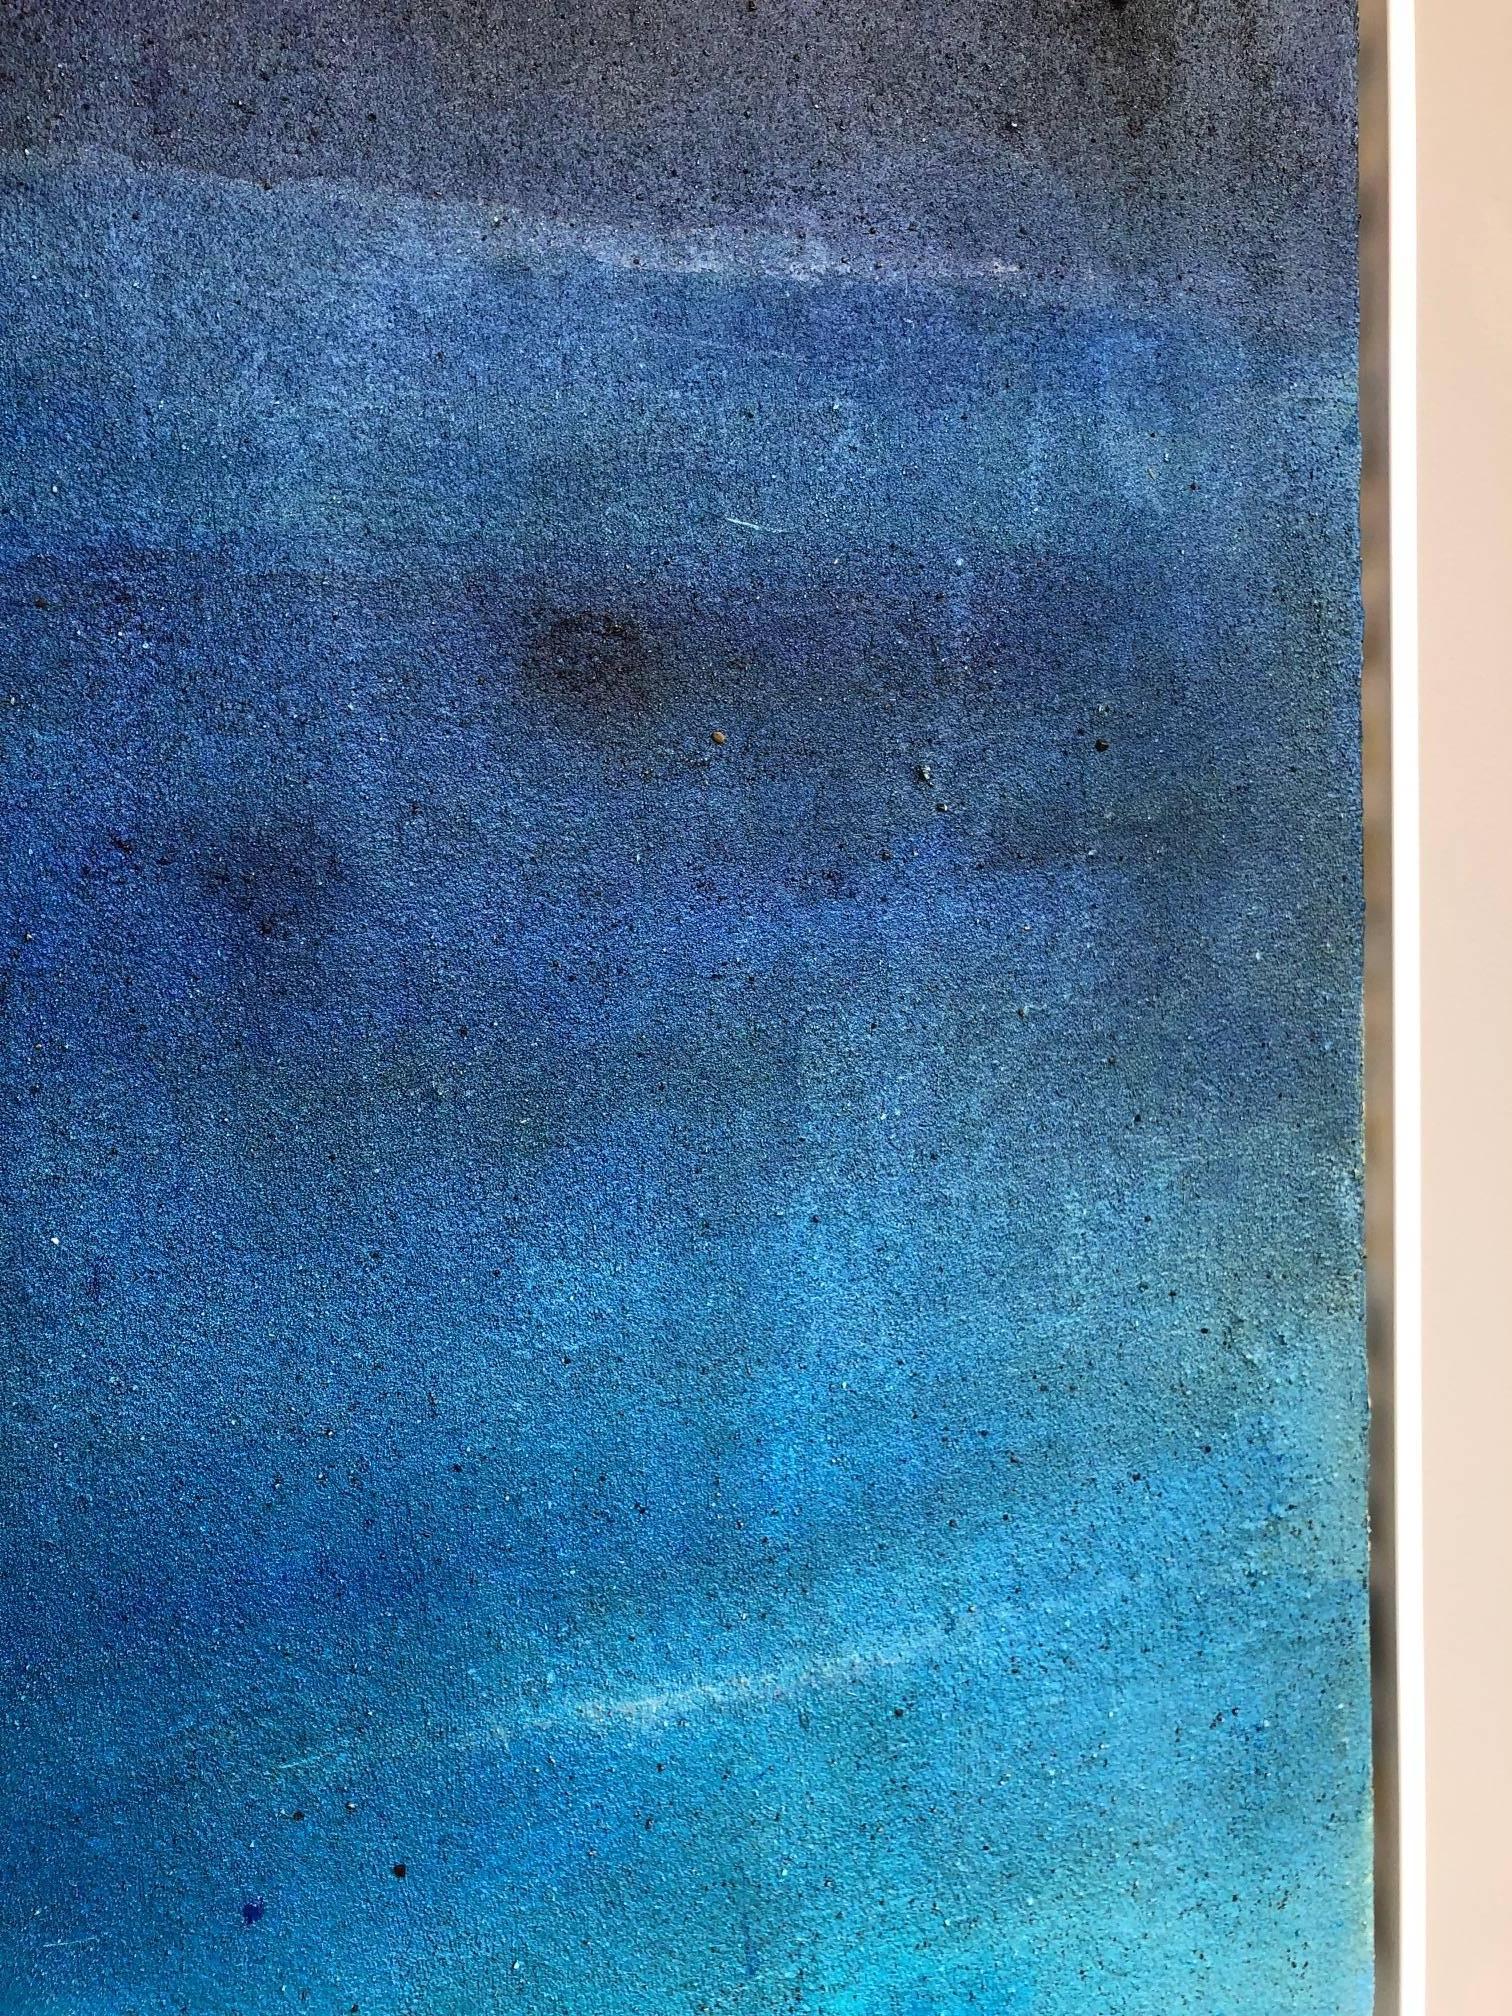 Nourish Her Blue / acrylic on canvas 6